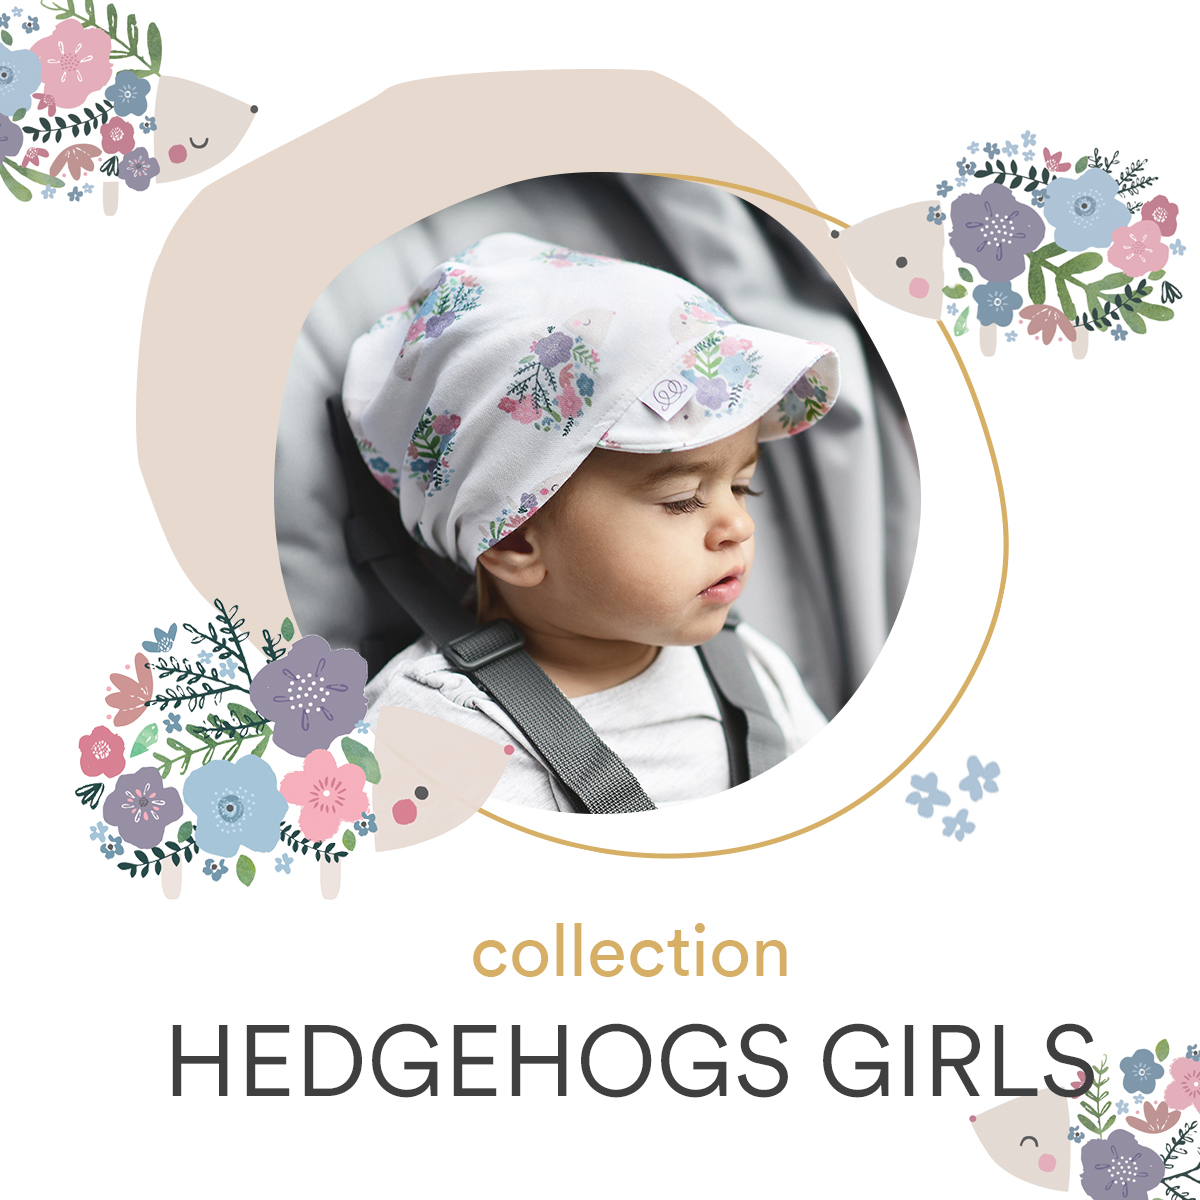 Hedgehogs girls